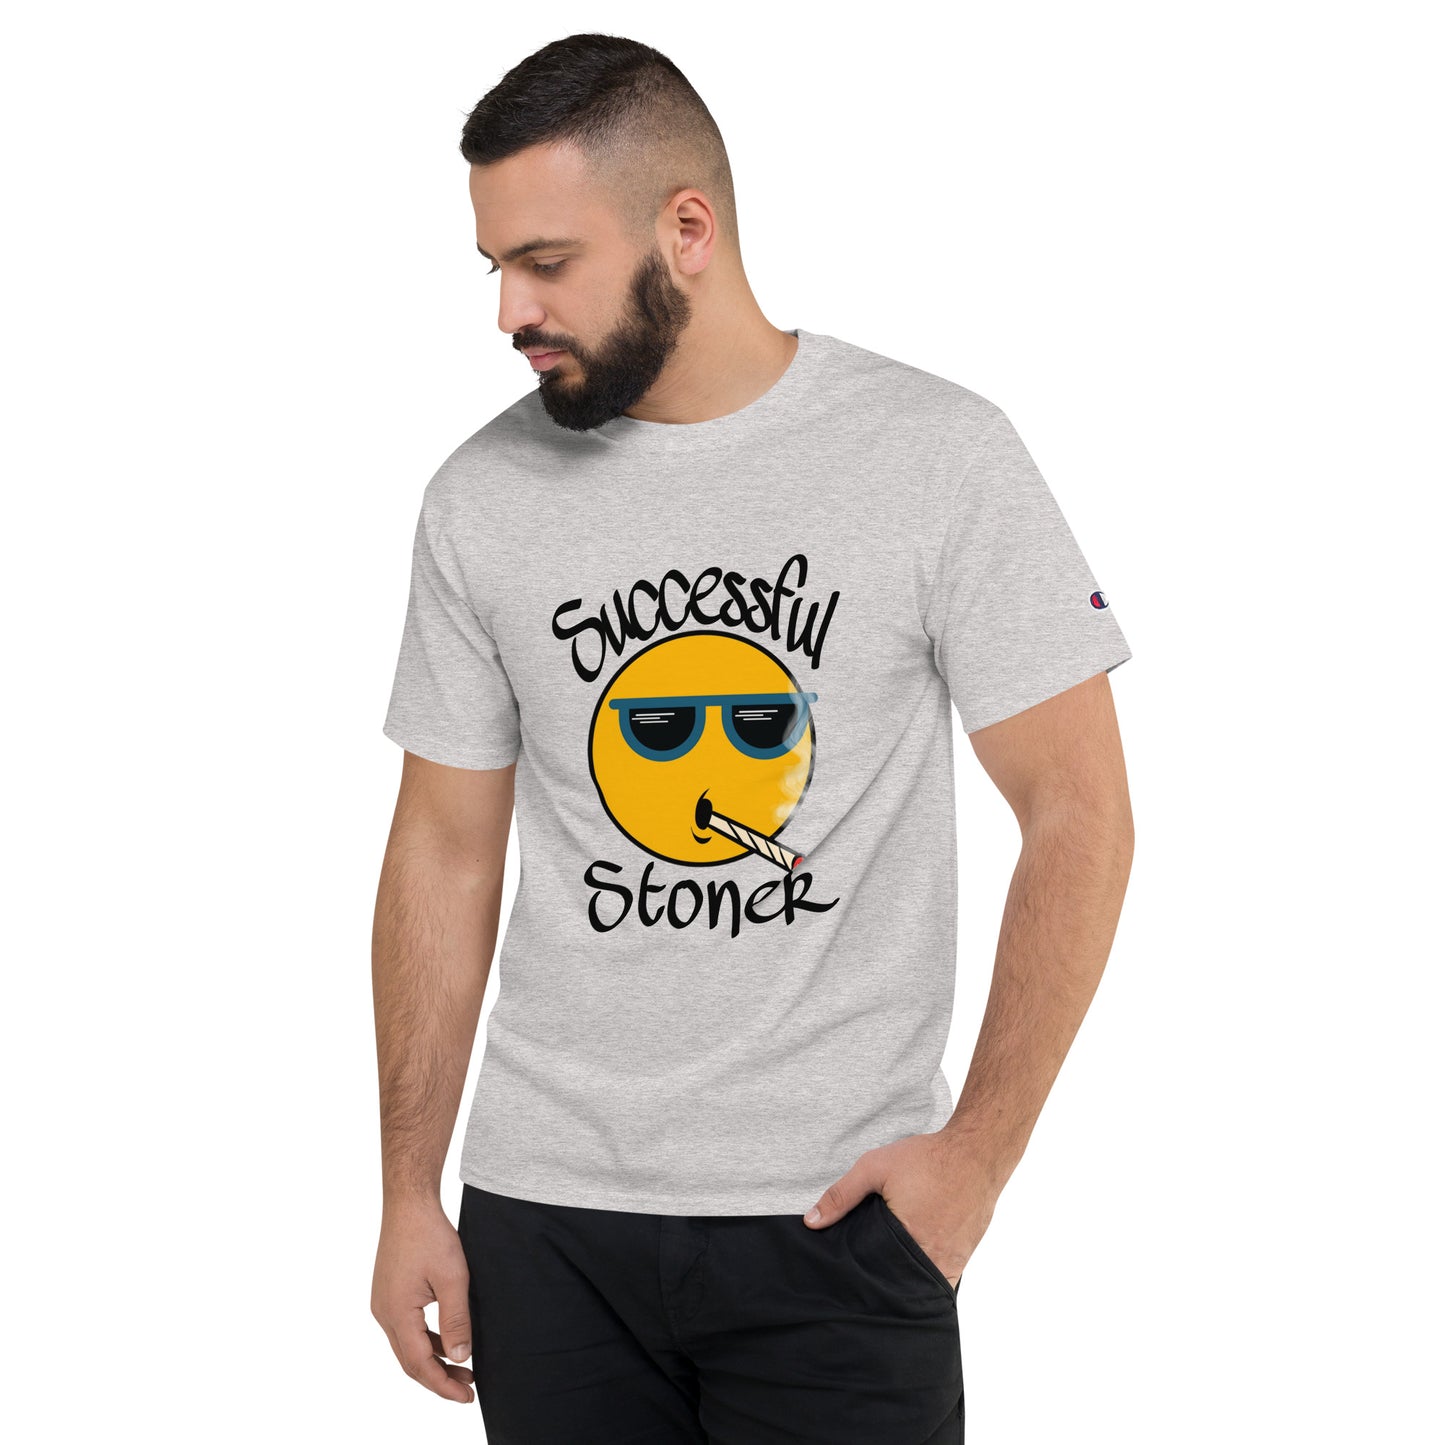 Successful Stoner Champion T-Shirt